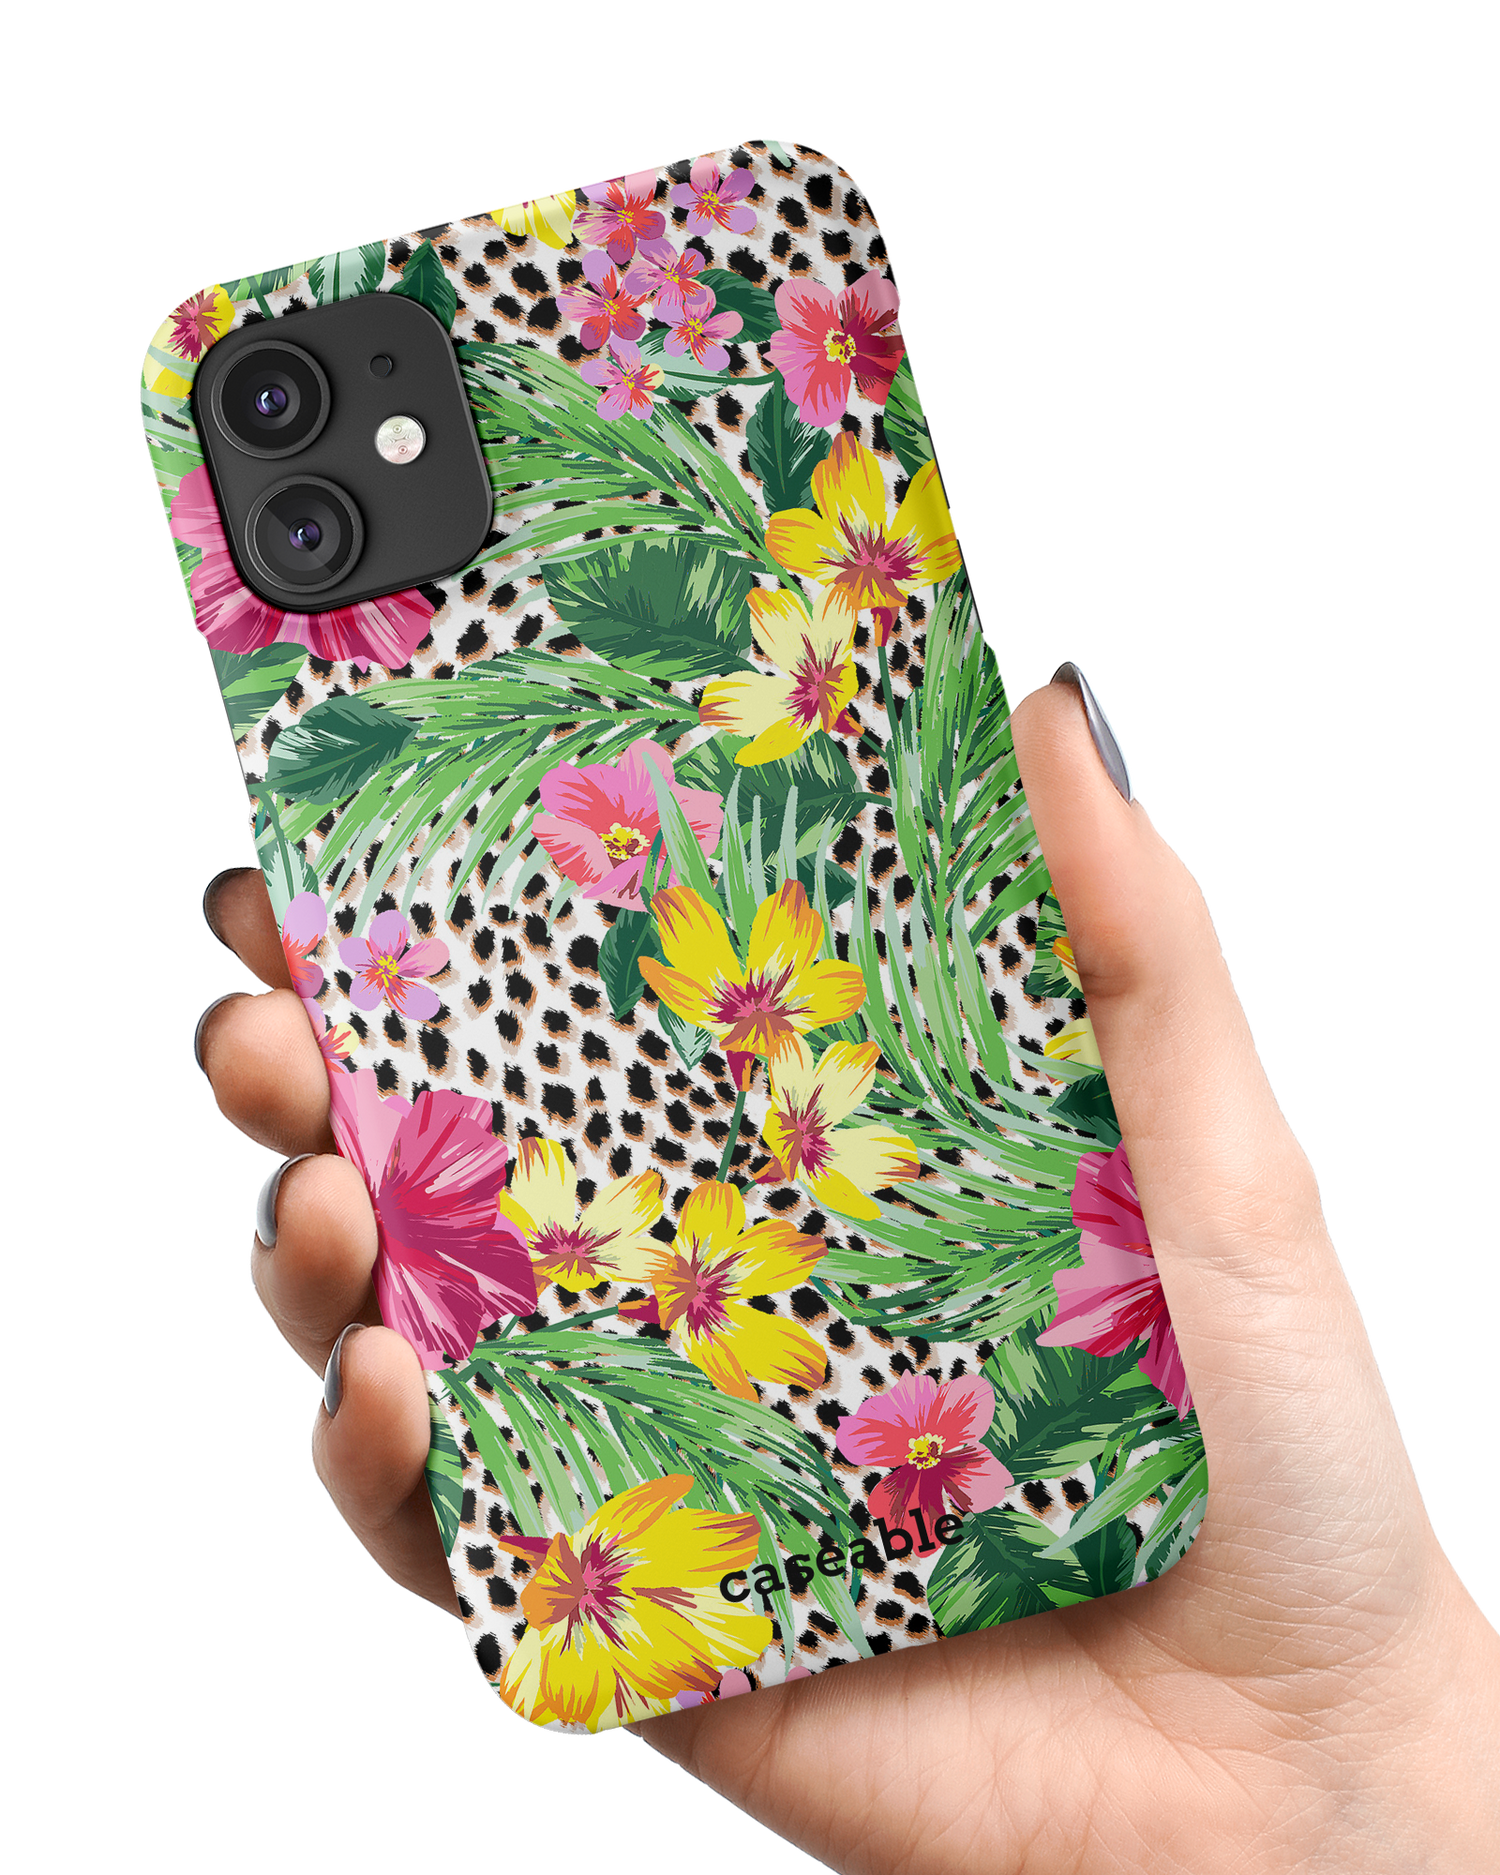 Tropical Cheetah Hard Shell Phone Case Apple iPhone 11 held in hand